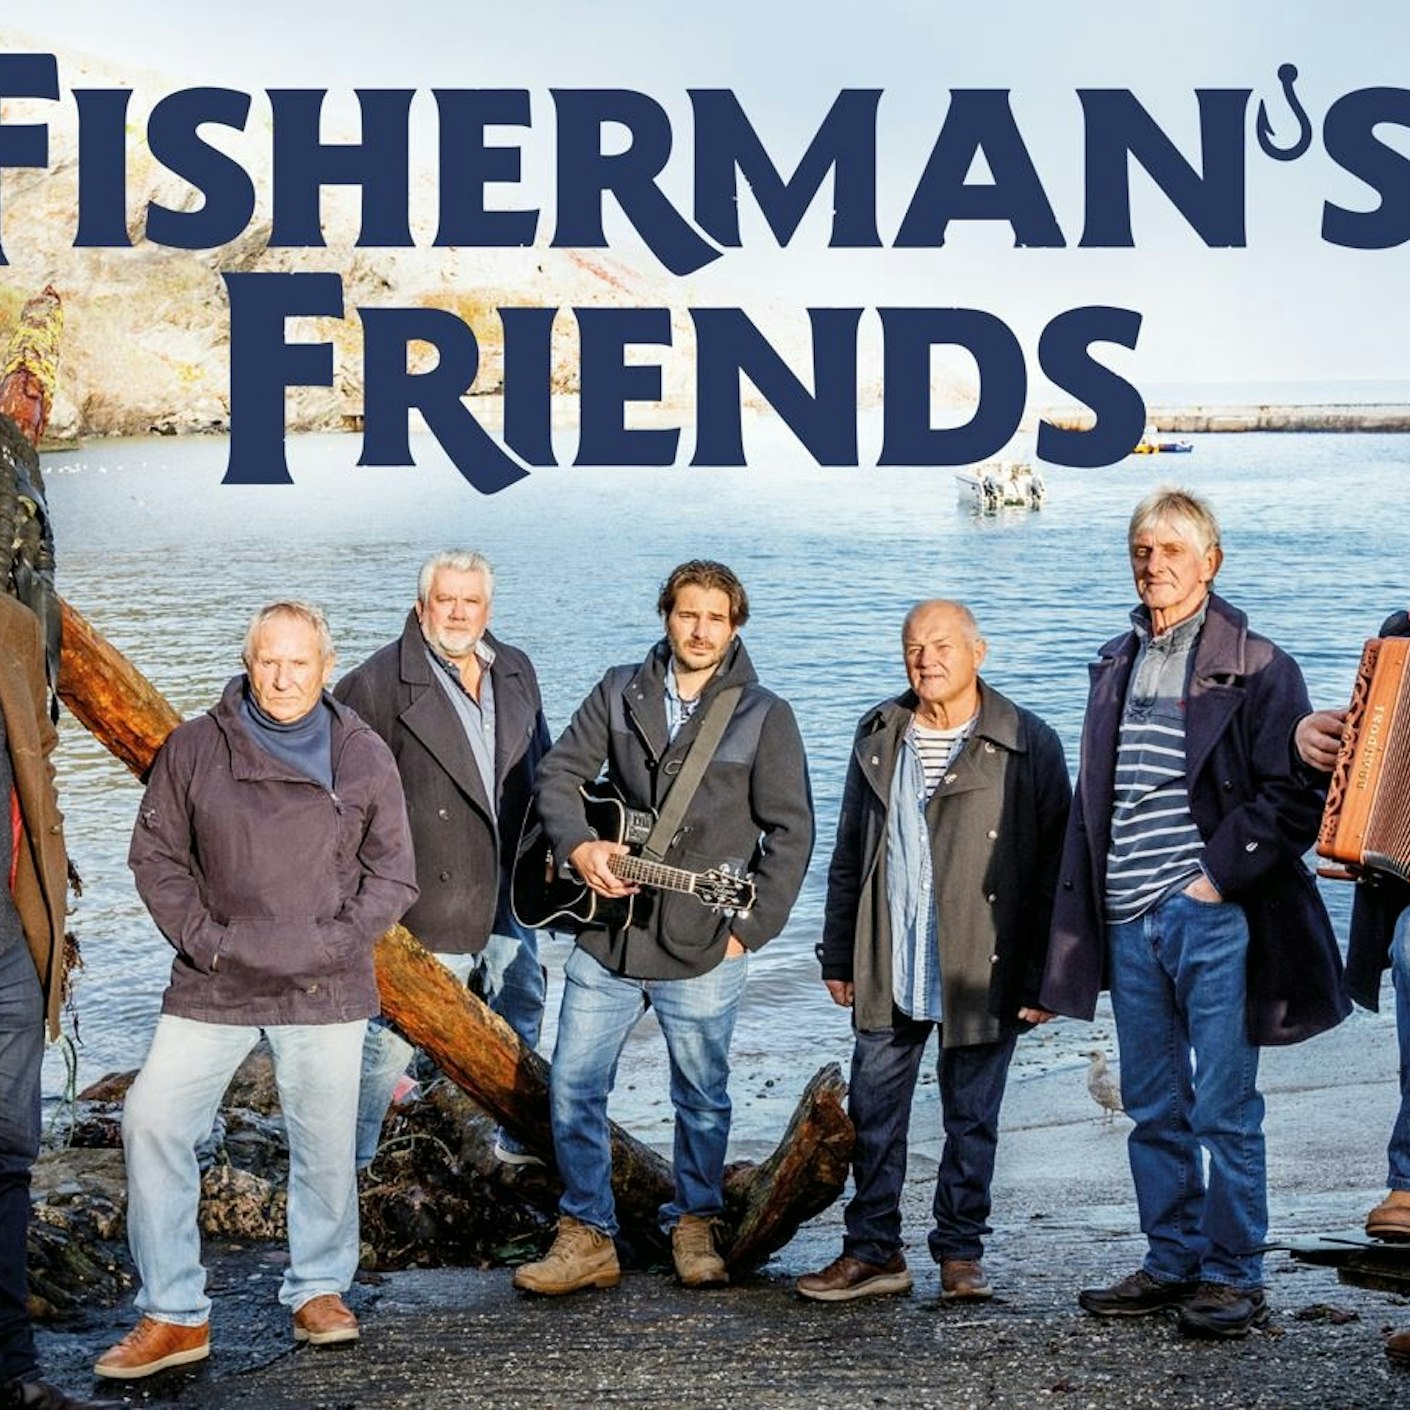 Fisherman's Friends - Reeling Reviews